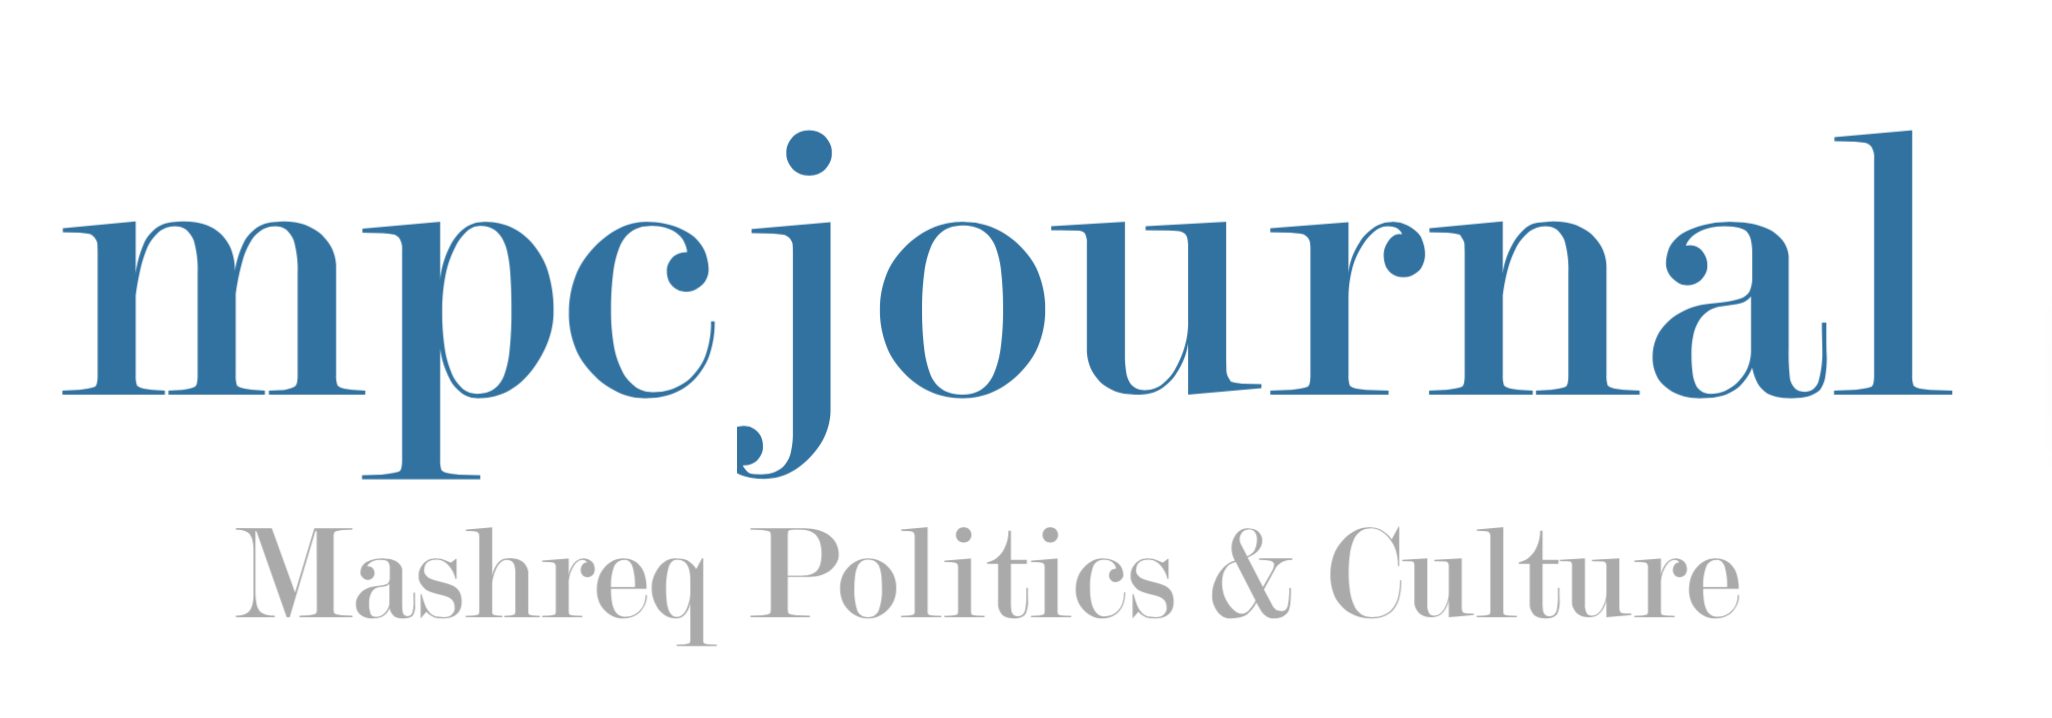 MPC JOURNAL - MASHREQ POLITICS & CULTURE JOURNAL